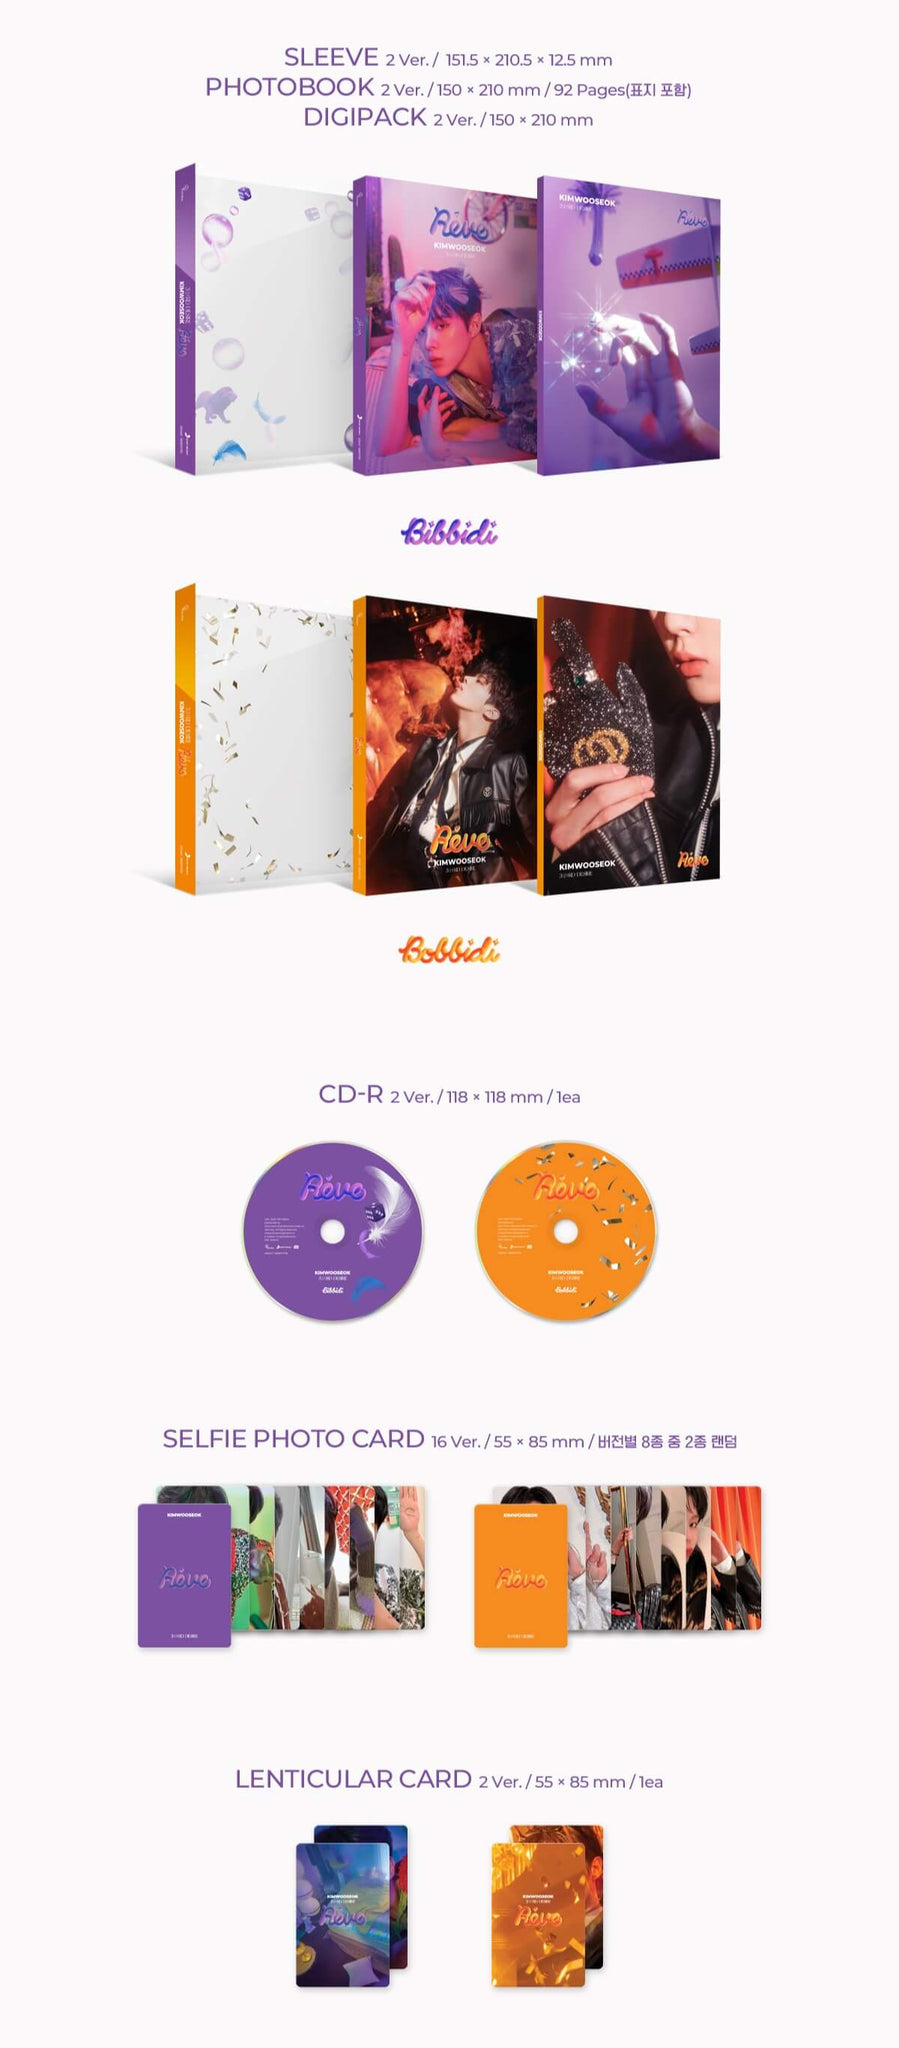 Kim Woo Seok 3rd Desire: Reve Inclusions Sleeve Photobook Digipack CD Selfie Photocard Lenticular Card